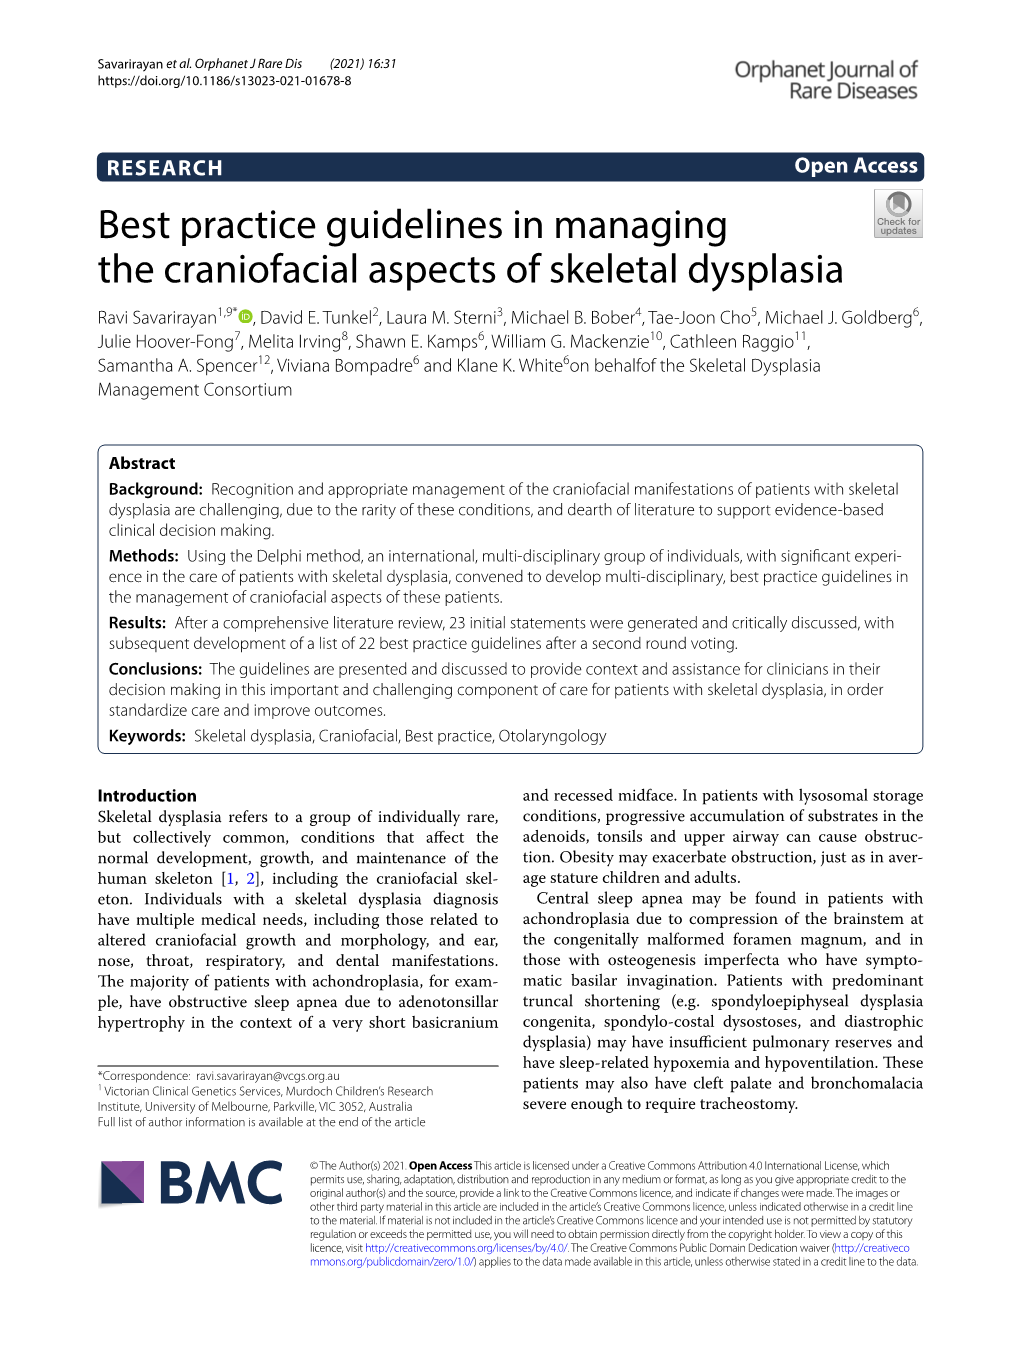 Best Practice Guidelines in Managing the Craniofacial Aspects of Skeletal Dysplasia Ravi Savarirayan1,9* , David E